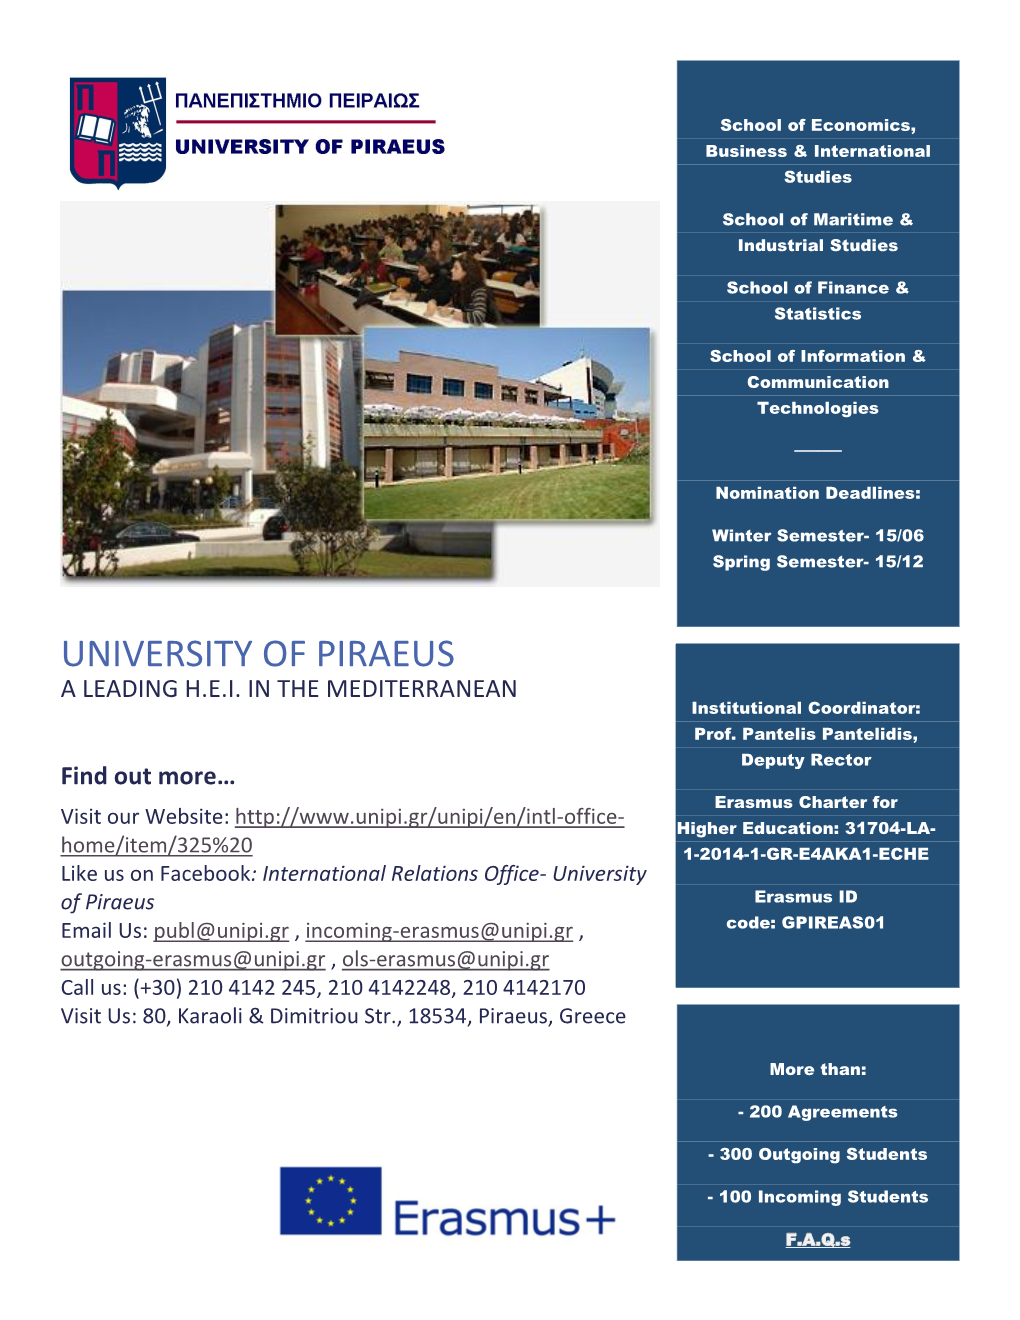 University of Piraeus a Leading H.E.I